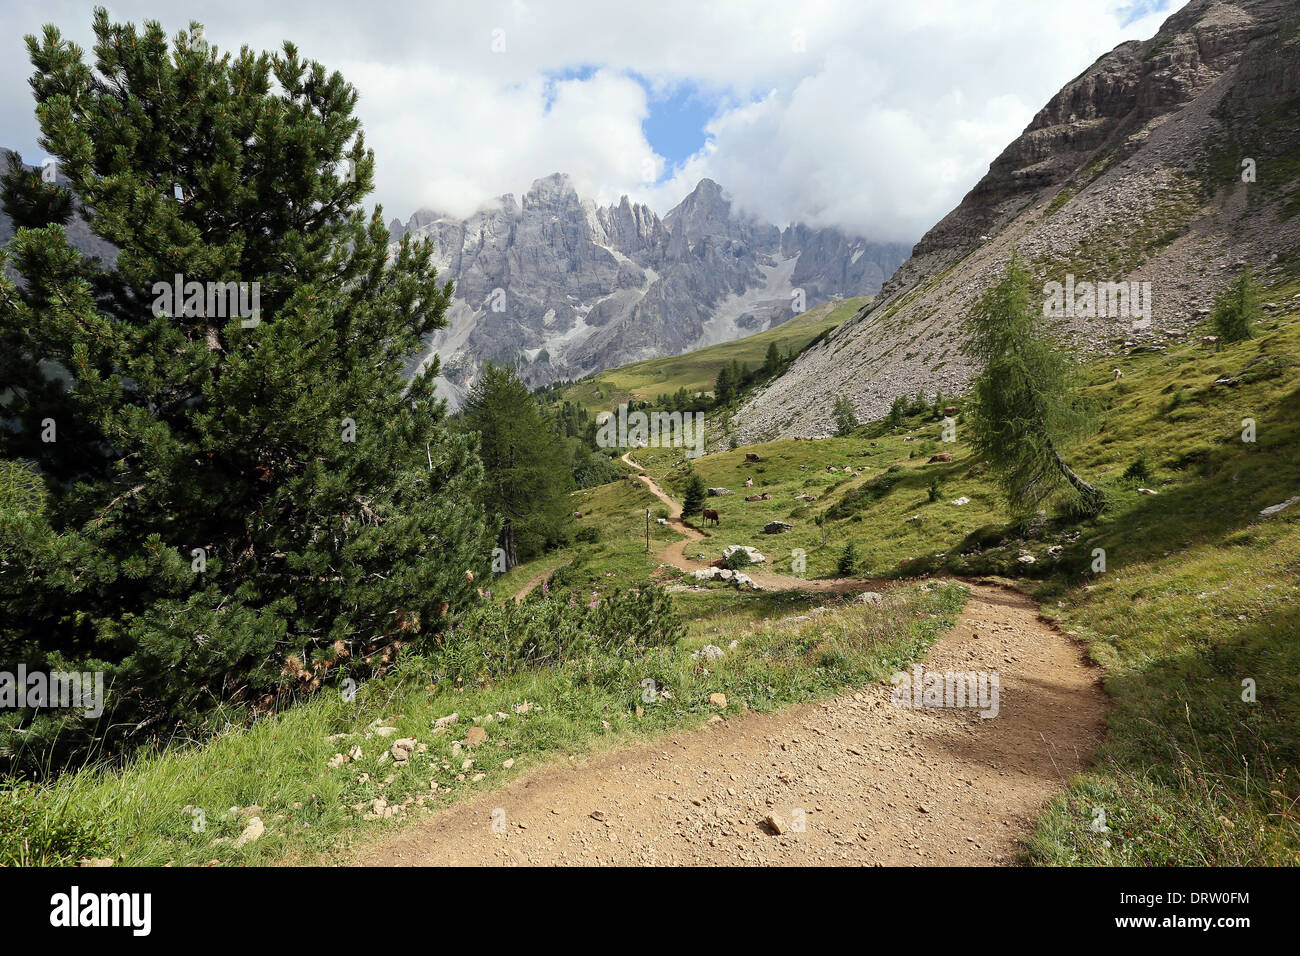 Pinus cembra tree, hiking trail. The Pale di San Martino mountain group. The Dolomites of Trentino. Italian Alps. Stock Photo